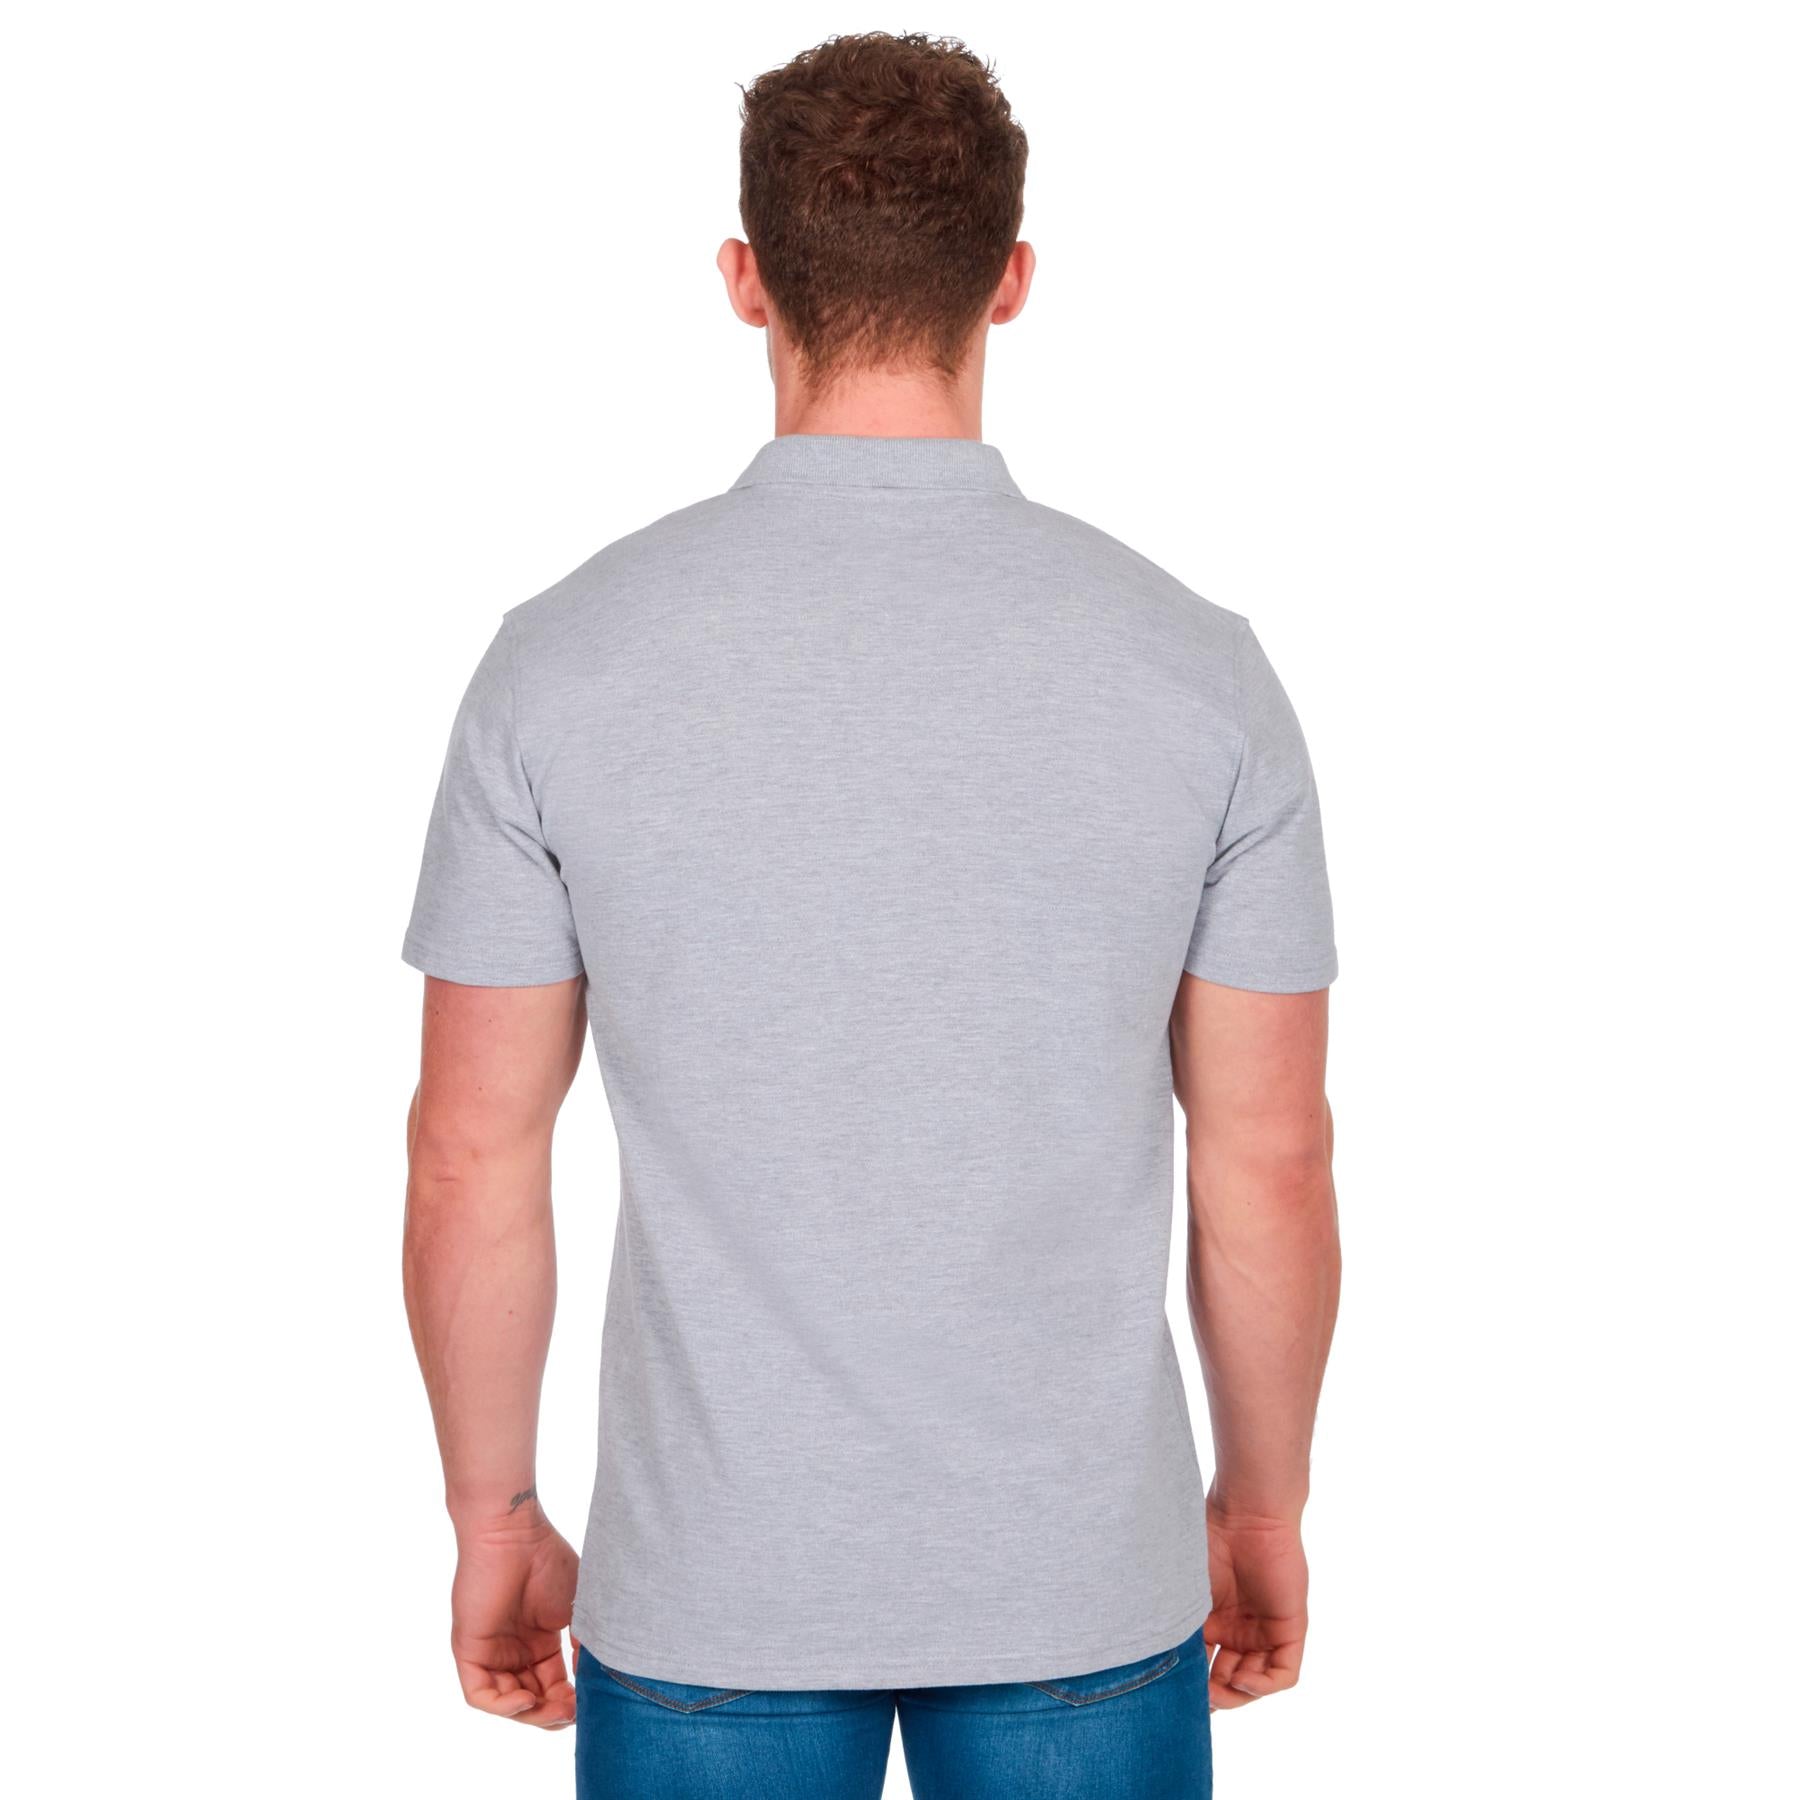 Royal Short Sleeve Polo T-Shirt